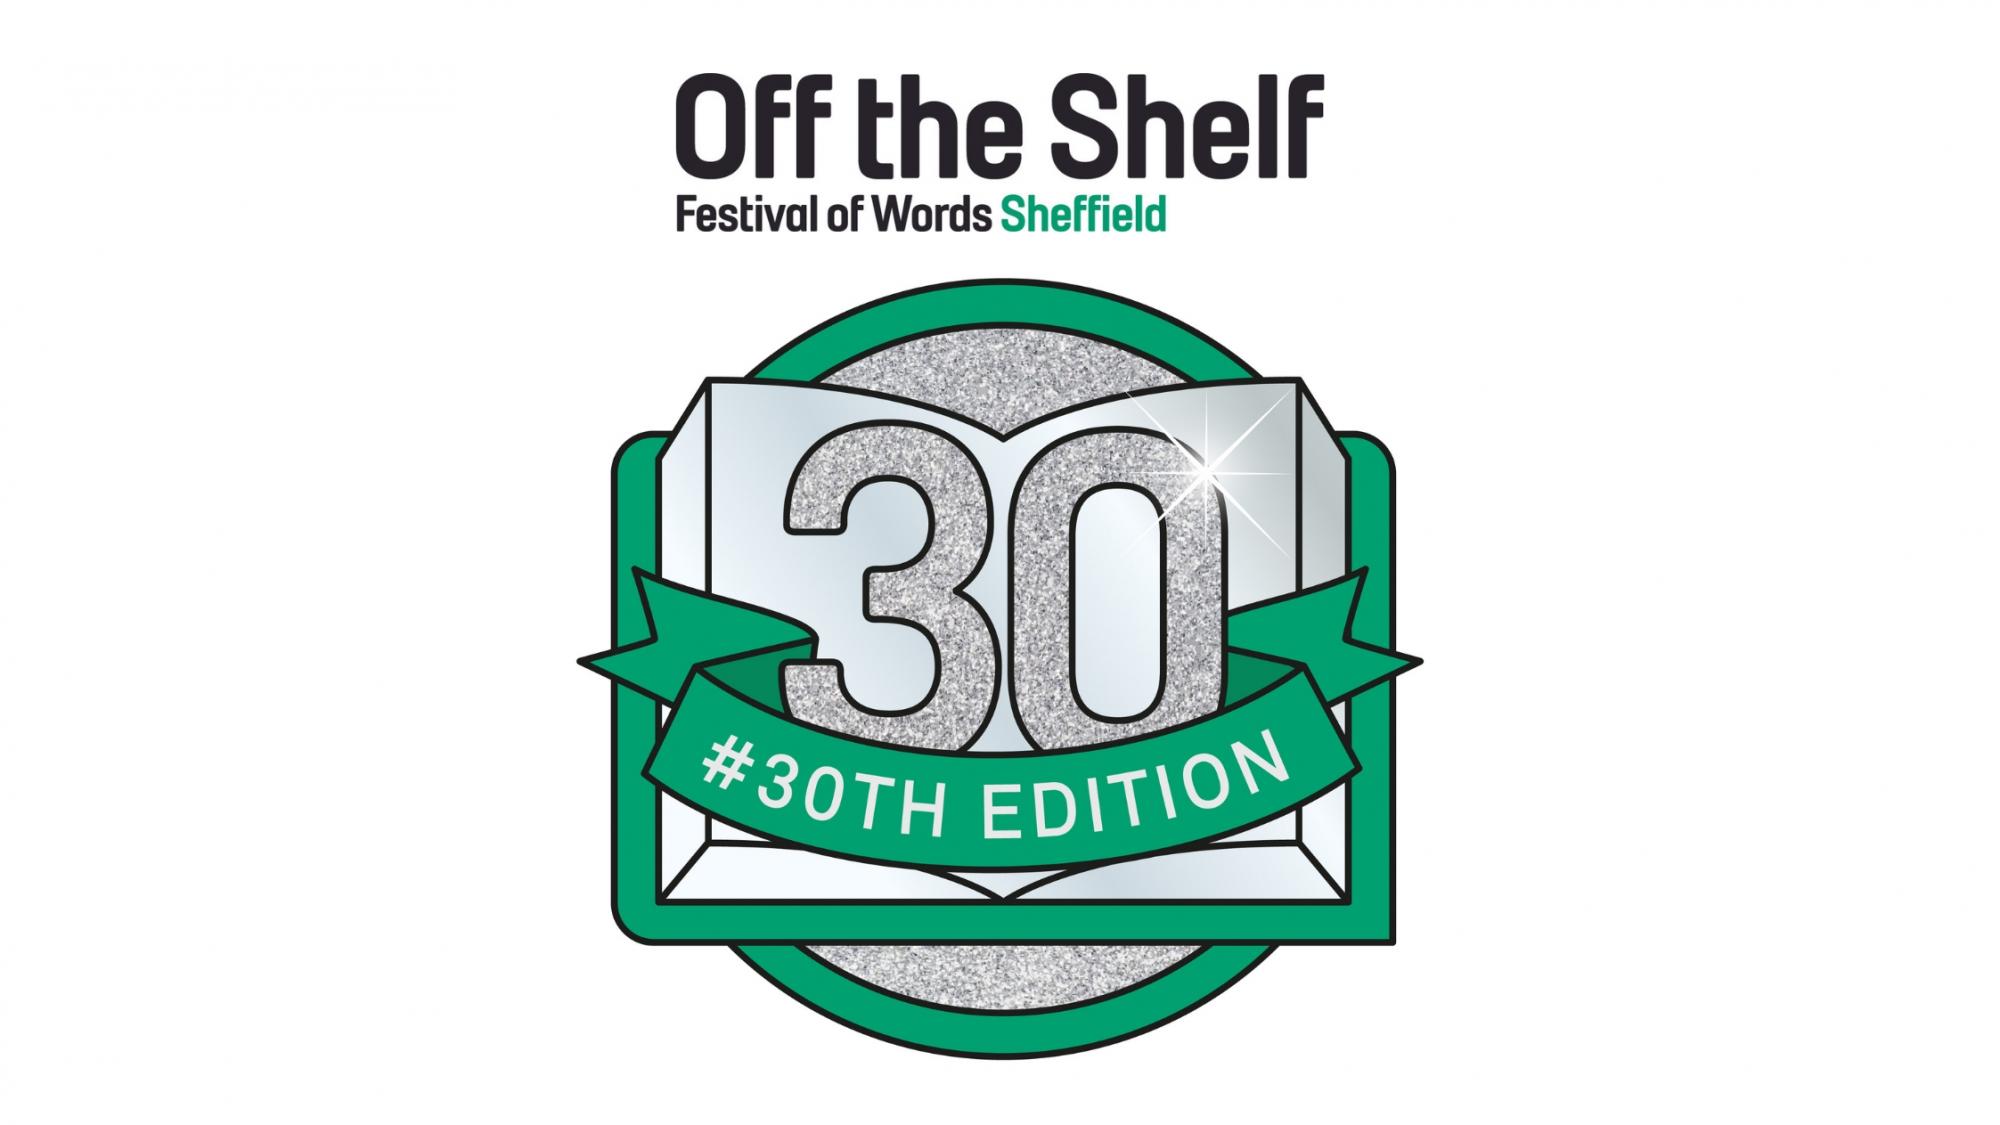 Off the Shelf 30th edition logo